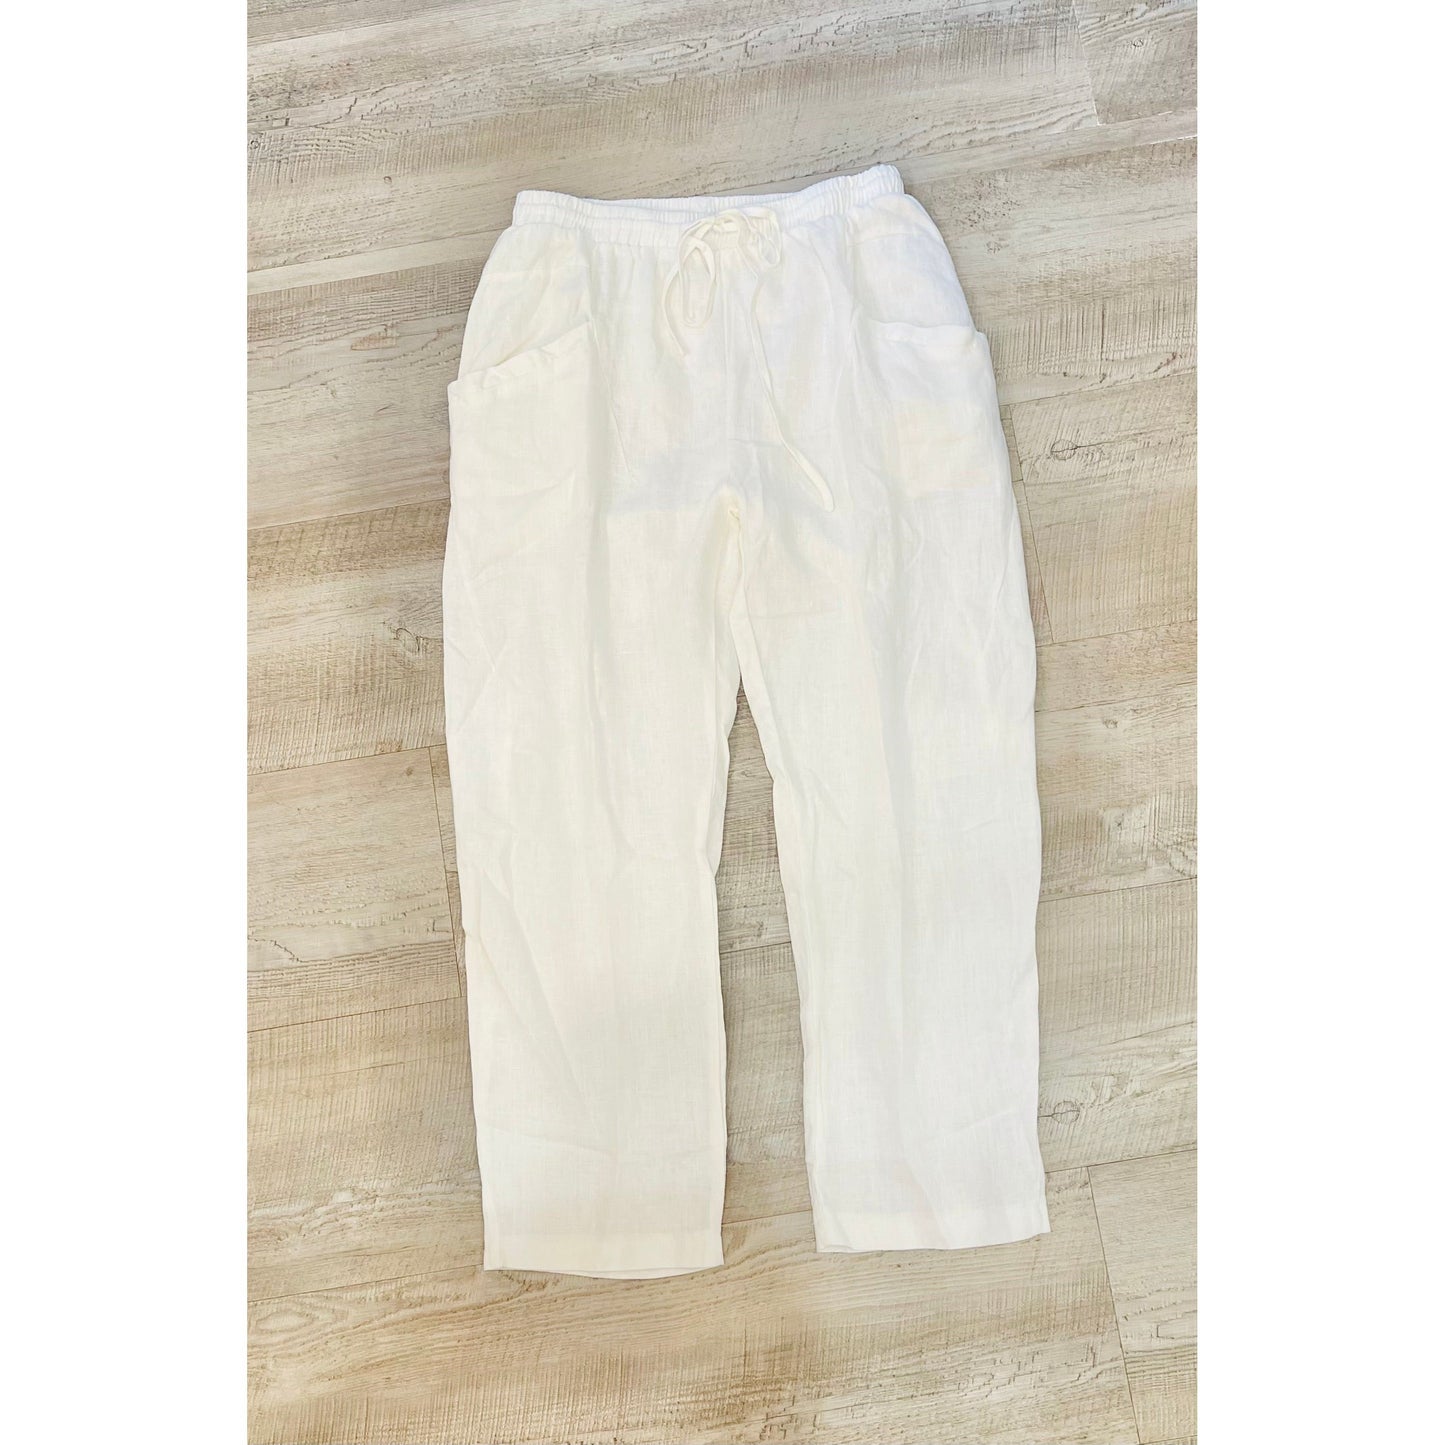 Leigh white linen pants